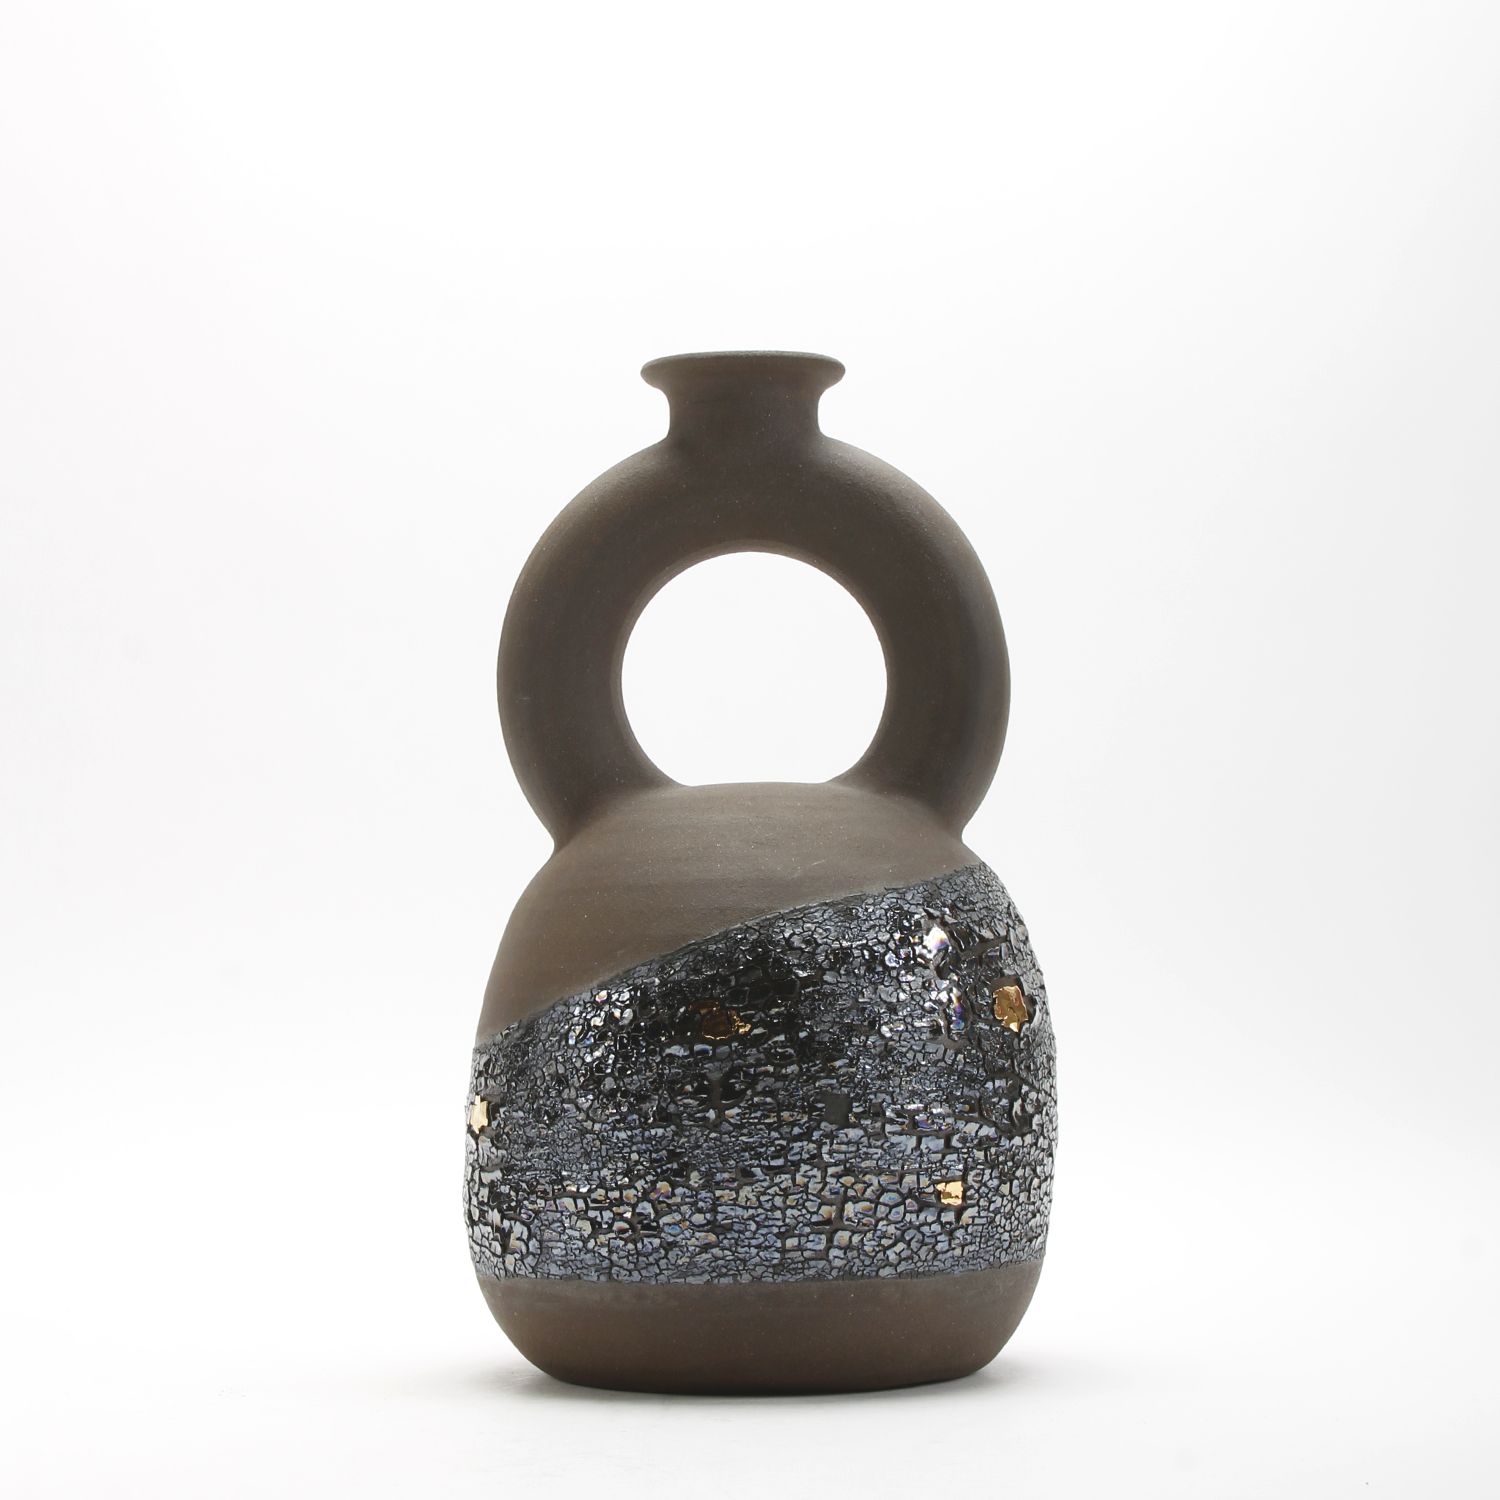 Cuir Ceramics: Large Brown Vessel Product Image 1 of 3